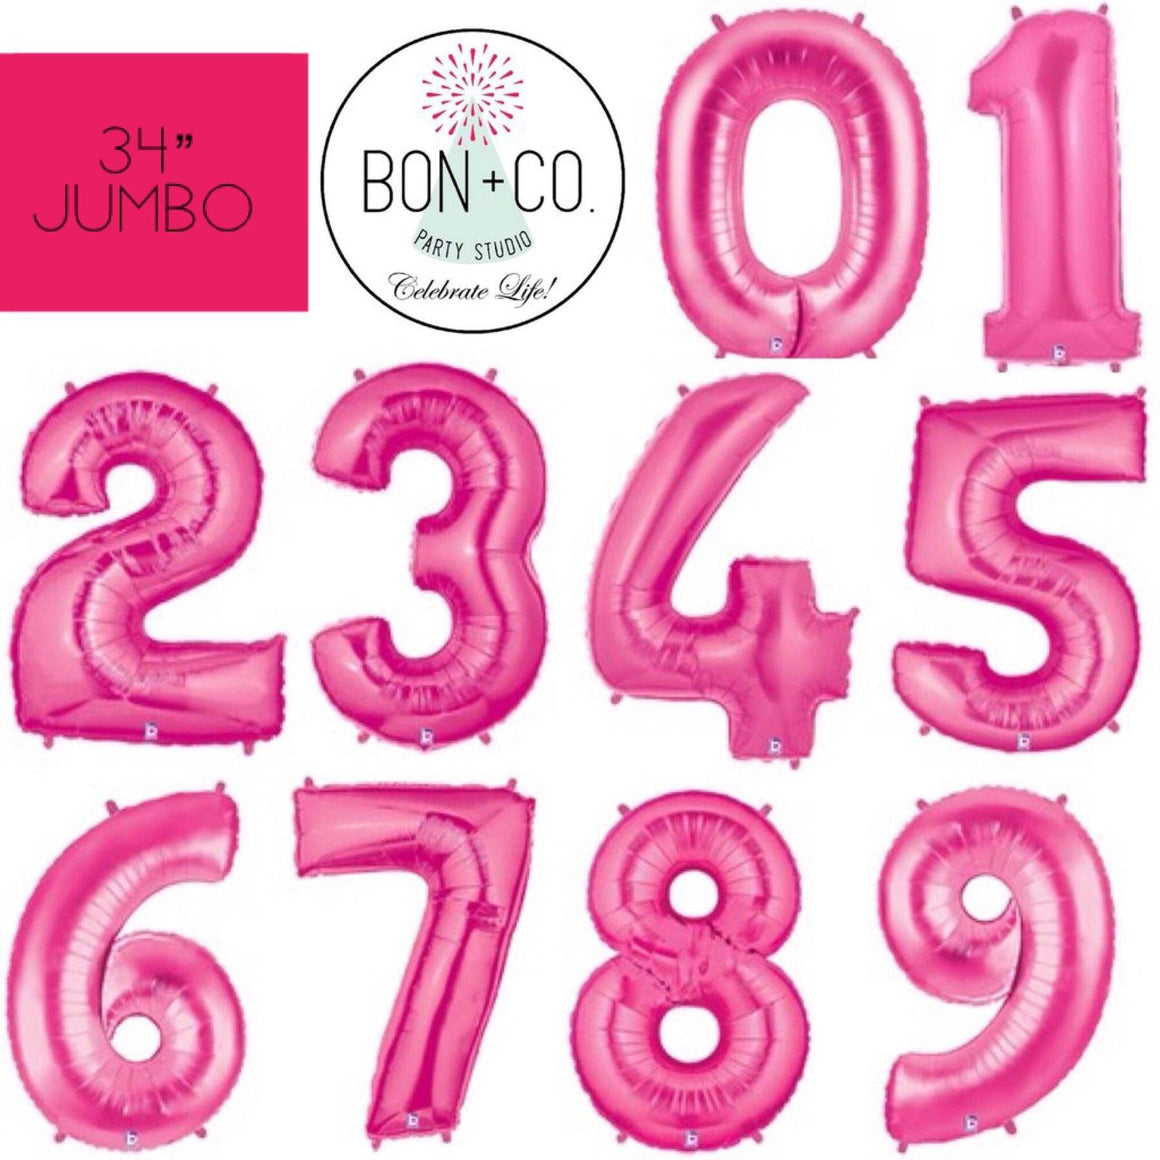 BALLOON BAR - 34" JUMBO NUMBER HOT PINK, Balloons, BETALLIC - Bon + Co. Party Studio